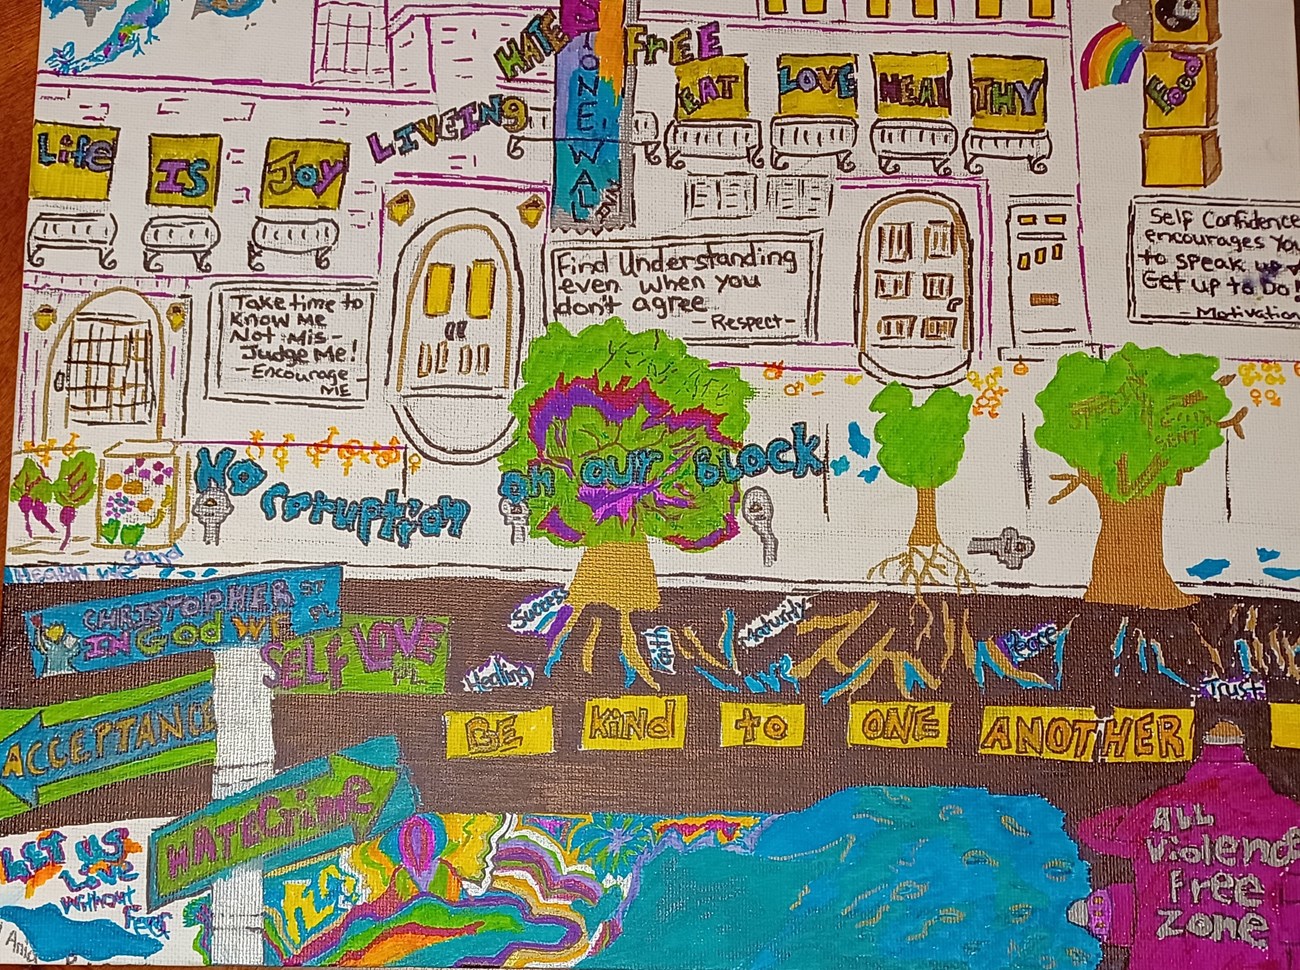 Stonewall Inn with activism slogans